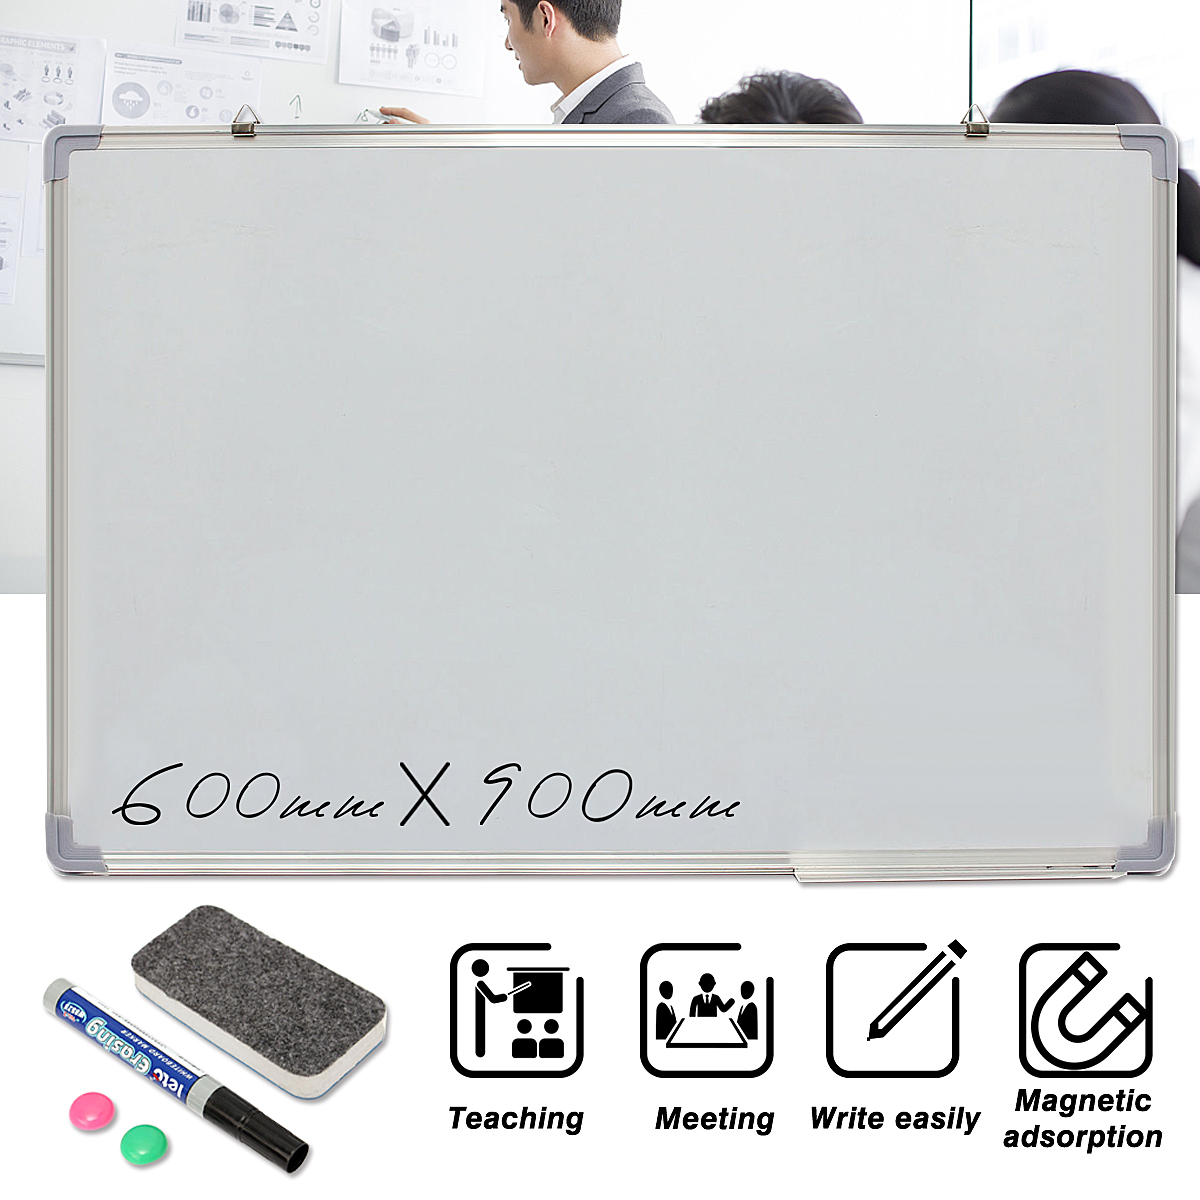 Magnetic-Dry-Wipe-Whiteboard-Portable-Office-School-Notice-Drawing-Board-1457993-3